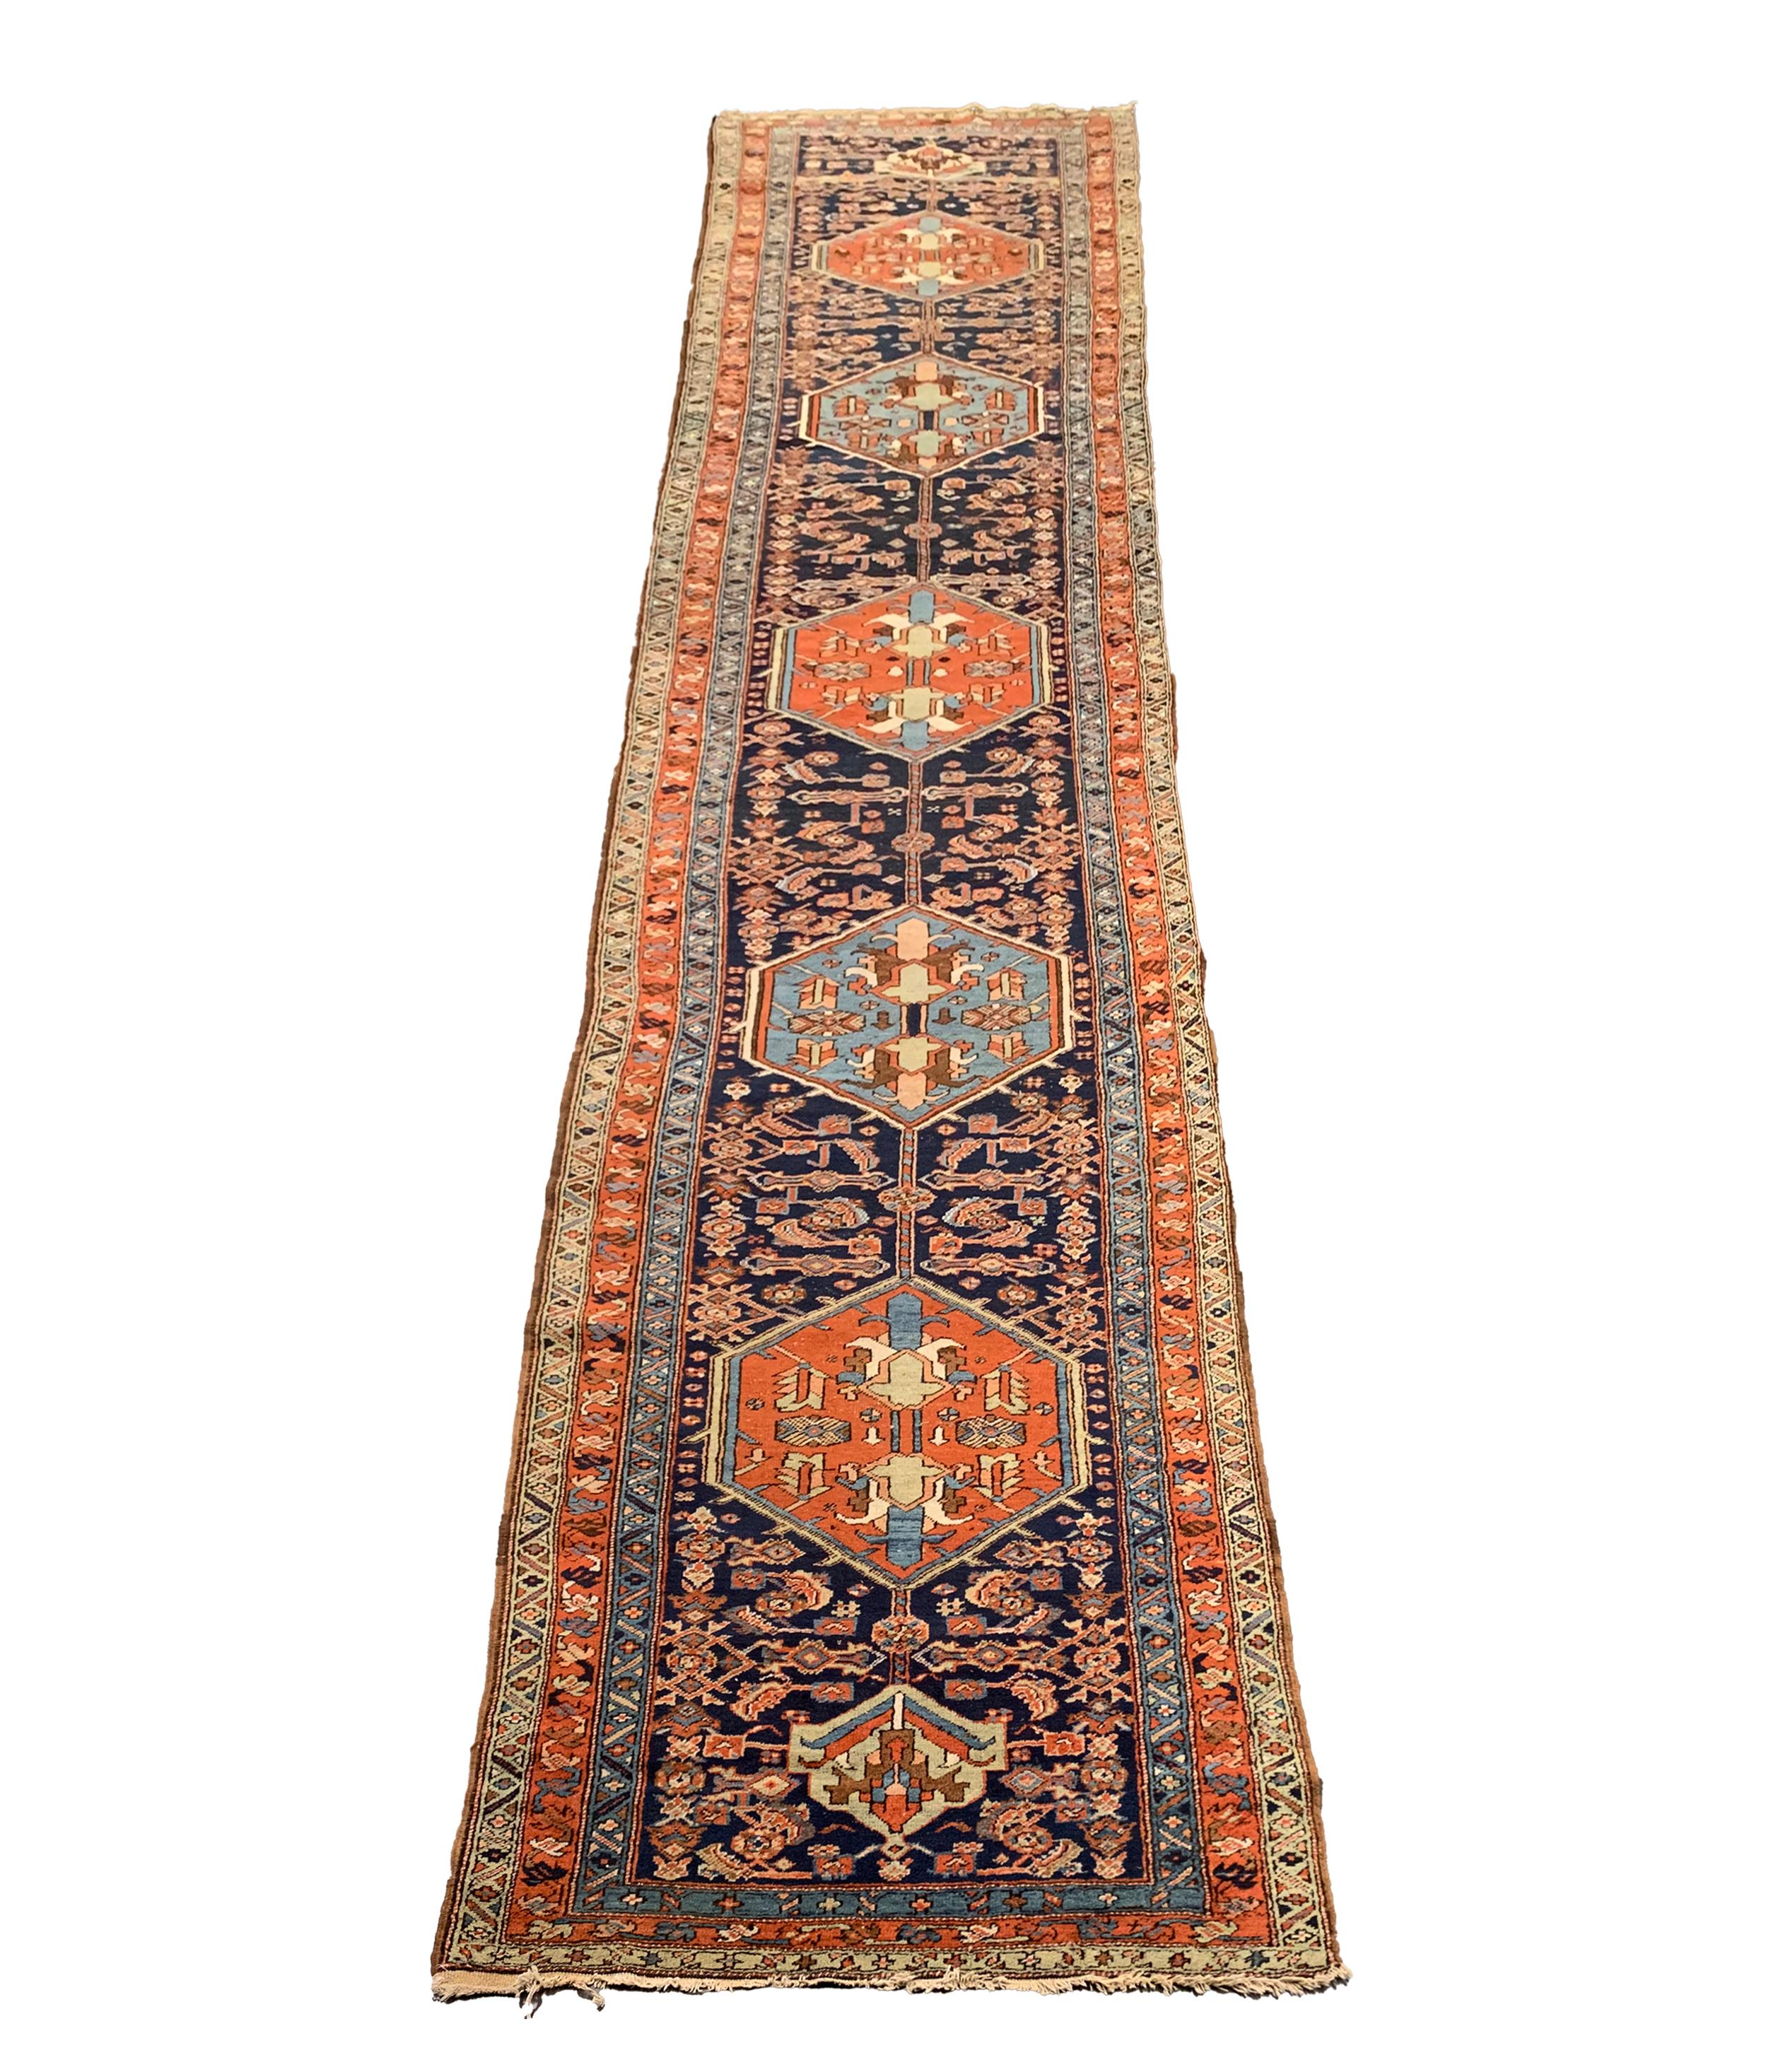 Iraqi Handmade Carpet Antique Wool Runner Rug Traditional Tribal Rug For Sale